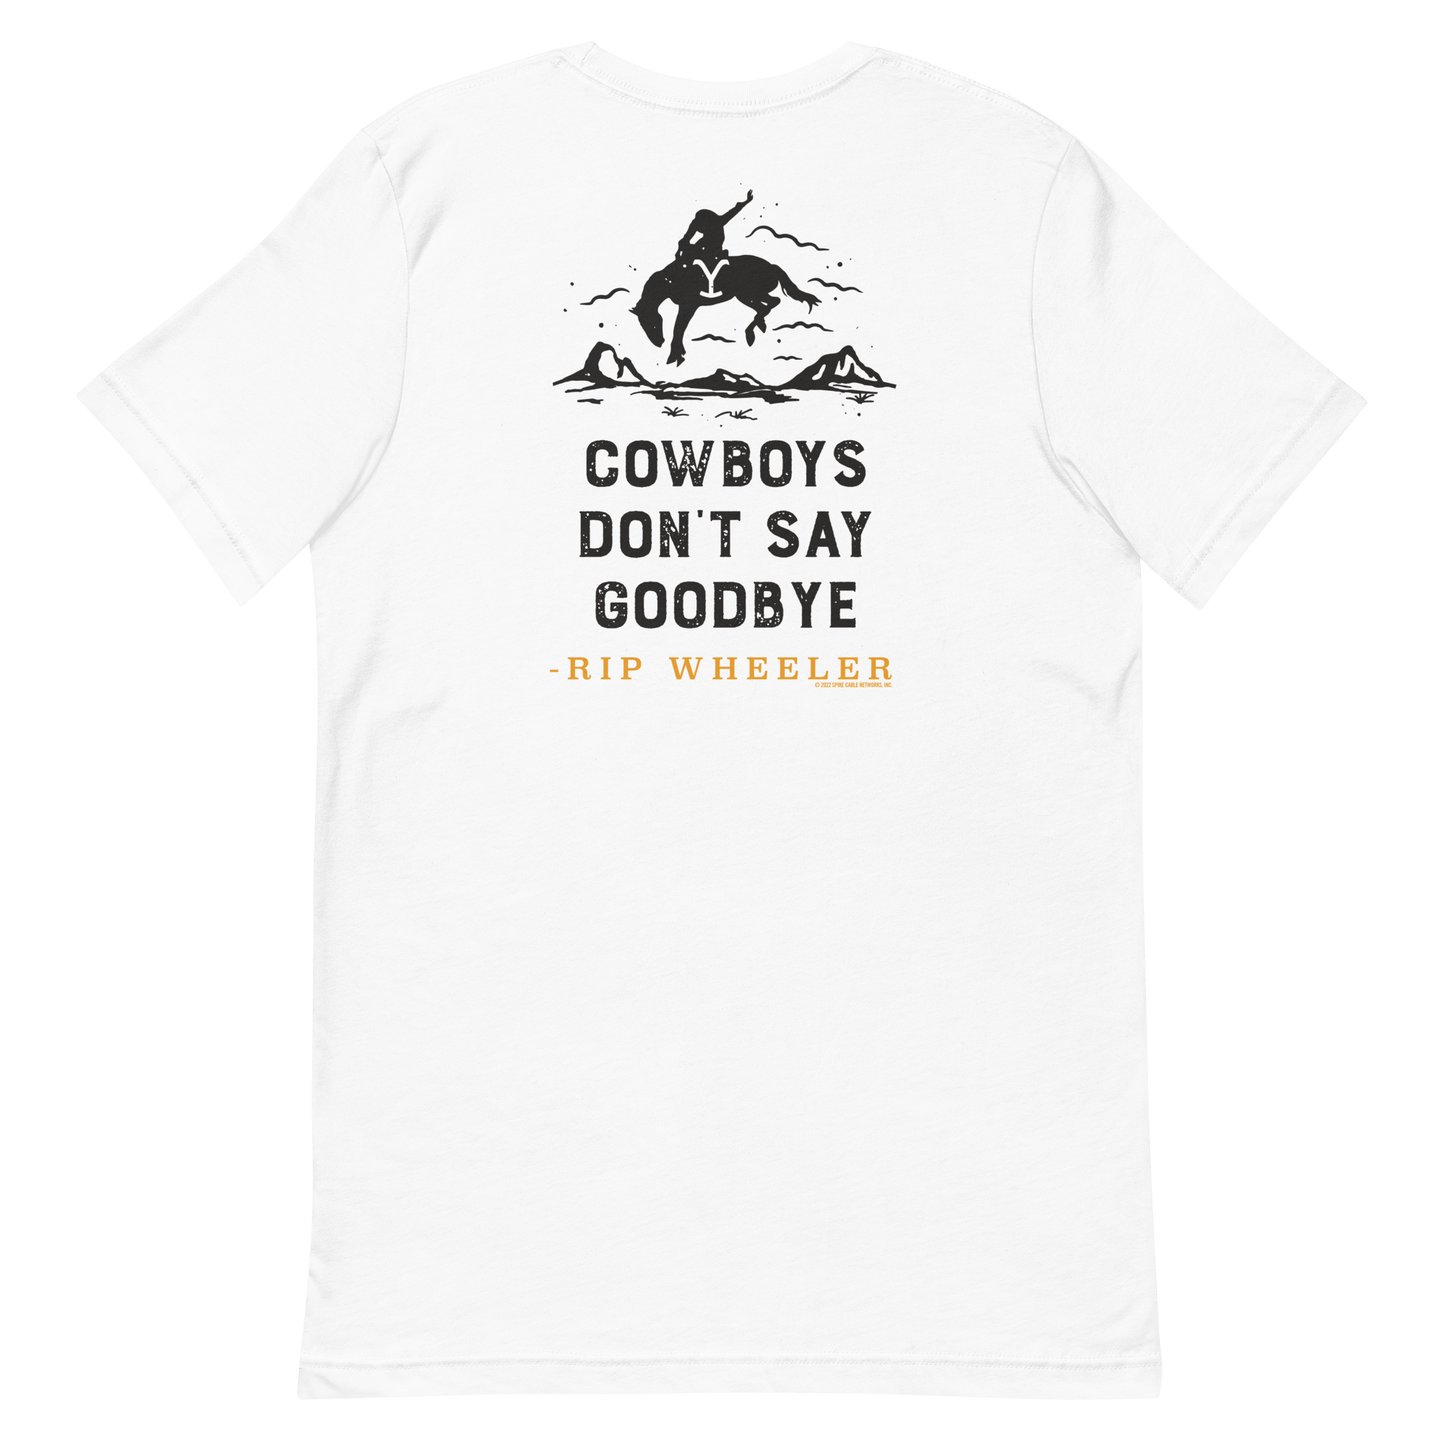 Yellowstone Cowboys Don't Say Goodbye Adult Short Sleeve T - Shirt - Paramount Shop